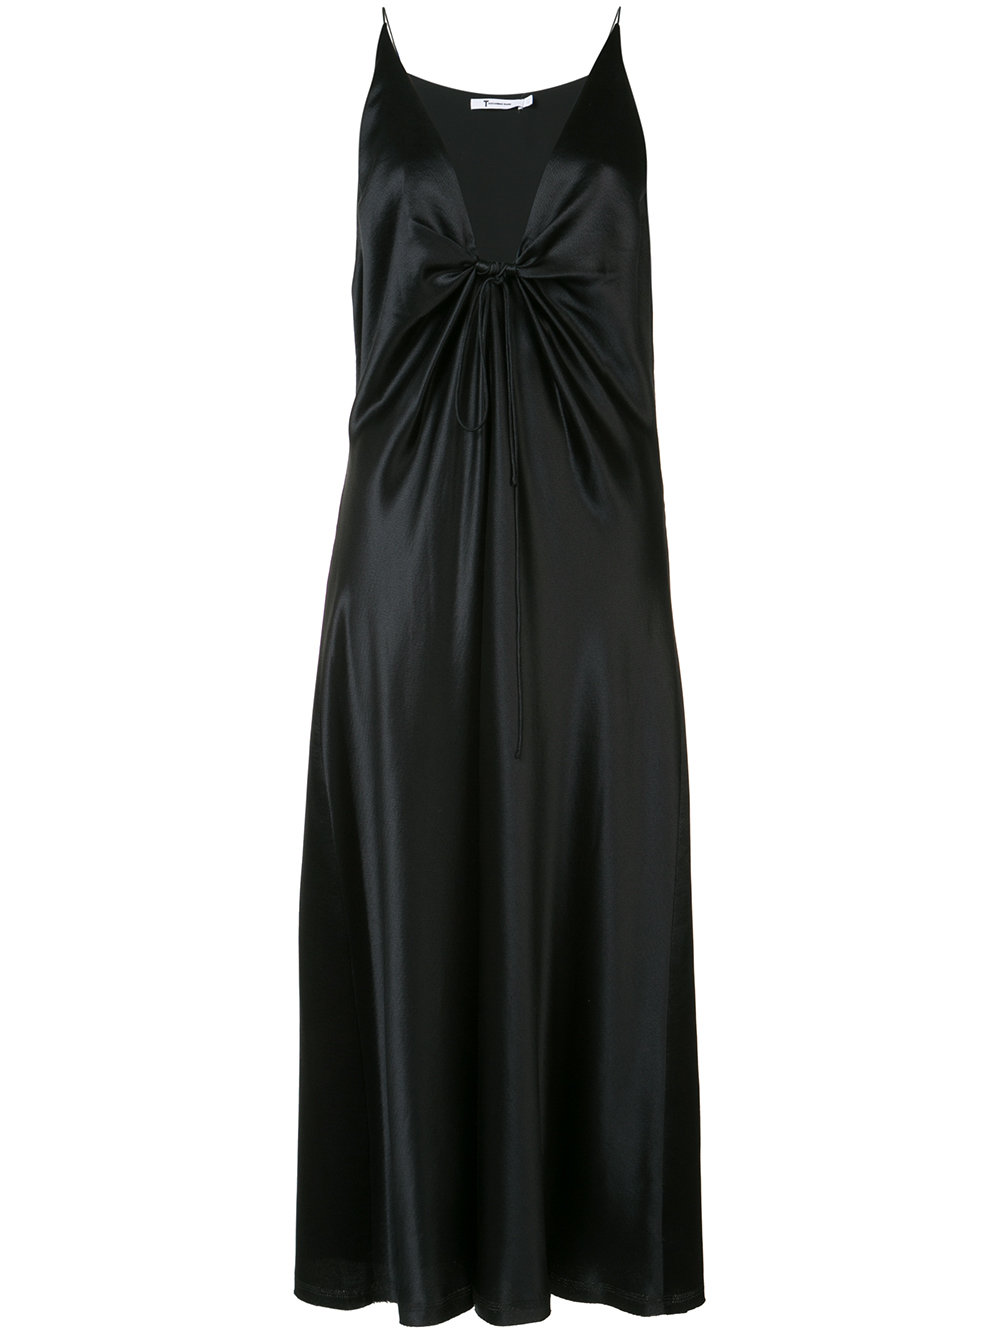 T BY ALEXANDER WANG strappy plunge dress, 32 089 ₽ (-10% на первый заказ | f10off)